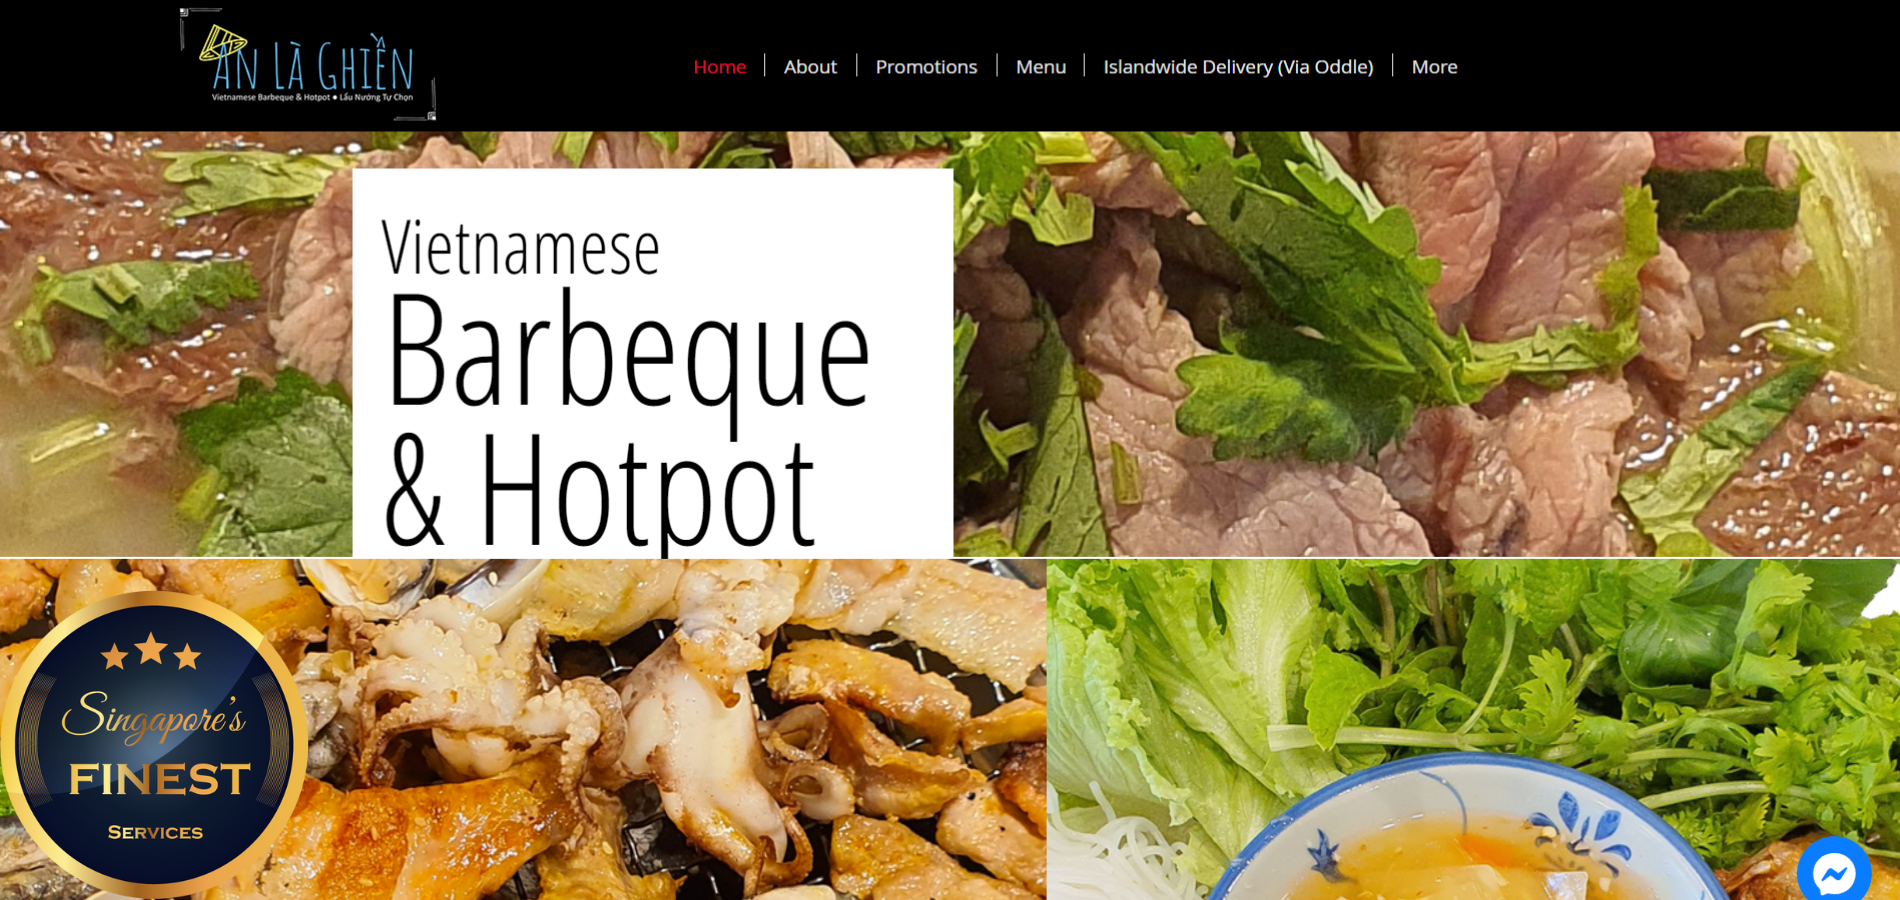 10 Best Vietnamese Restaurants in Singapore